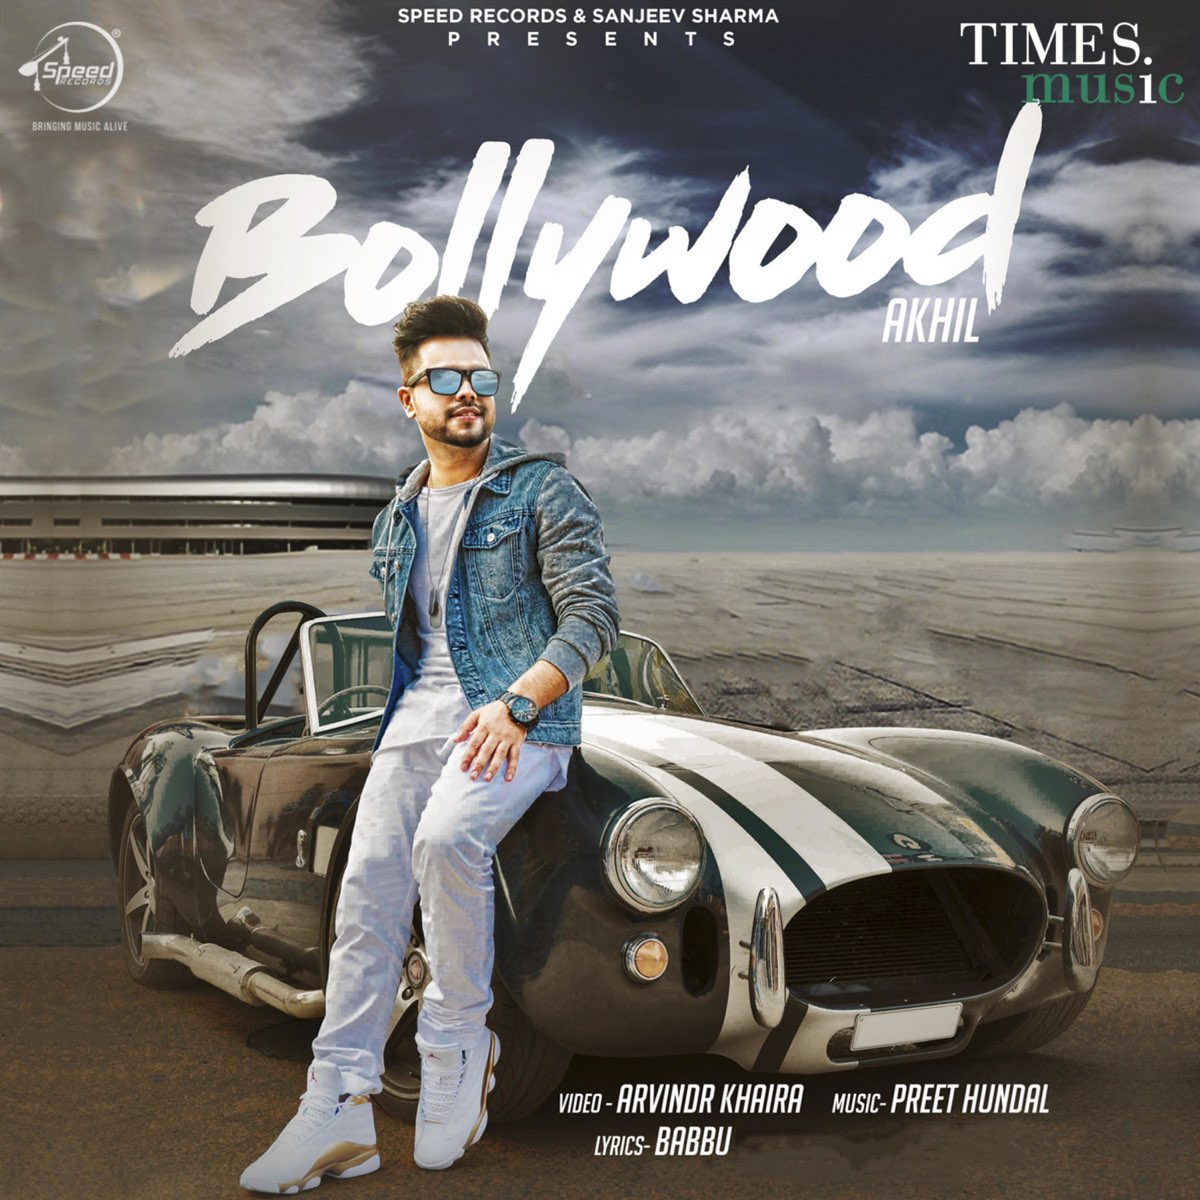 Bollywood - Single by Akhil on Apple Music